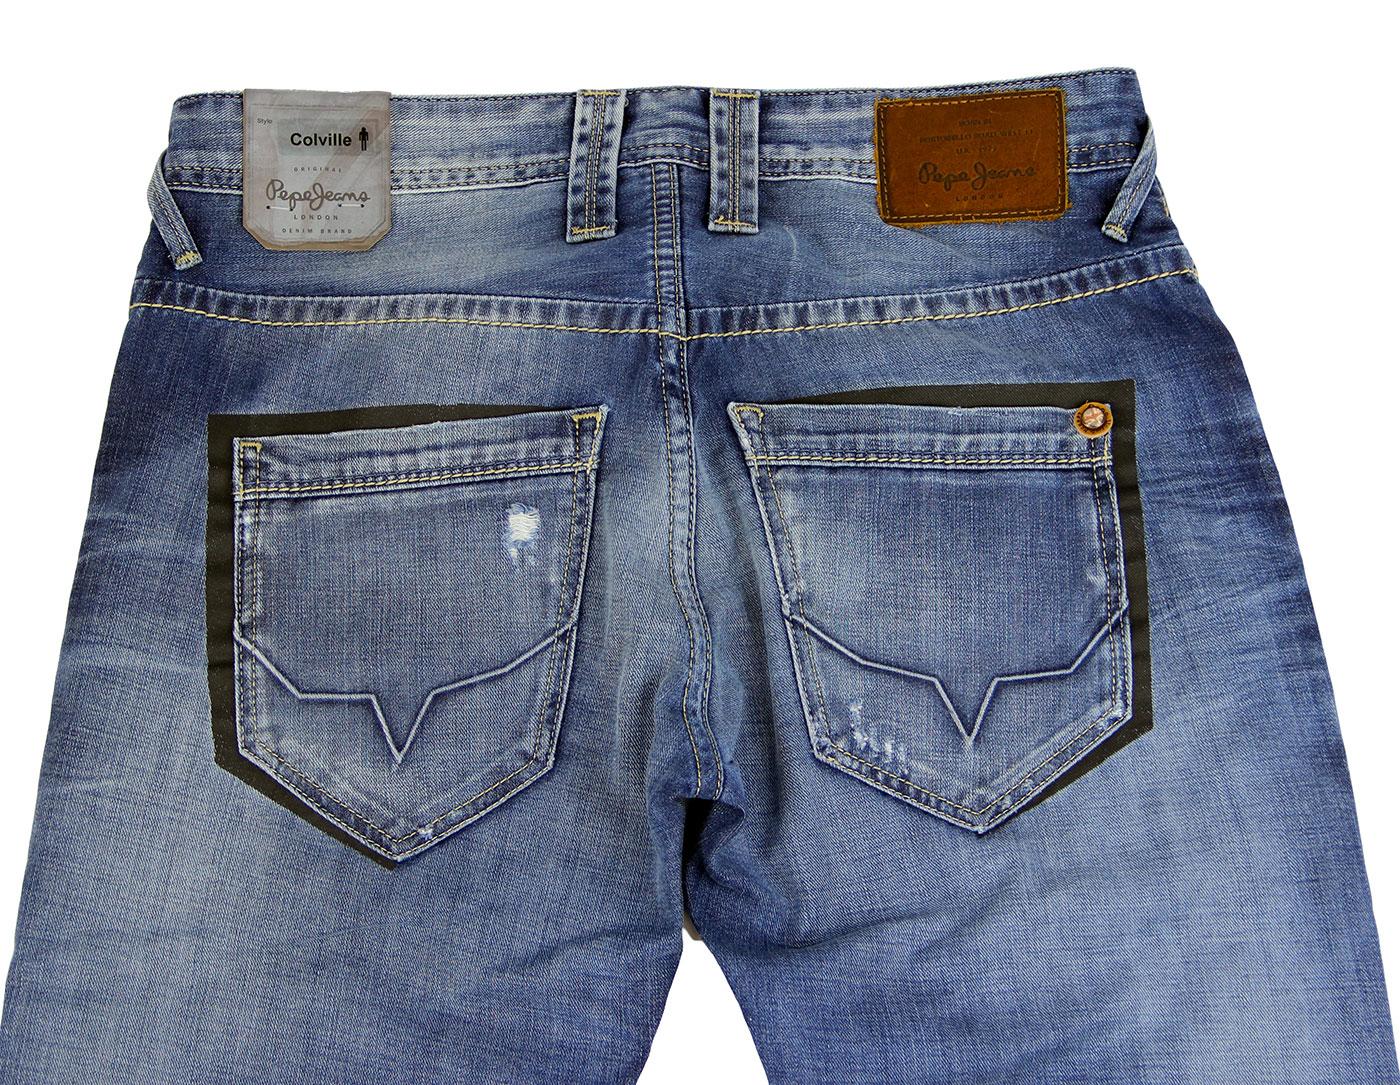 PEPE JEANS Colville Retro Indie Vintage Wash Slim Tapered Jeans